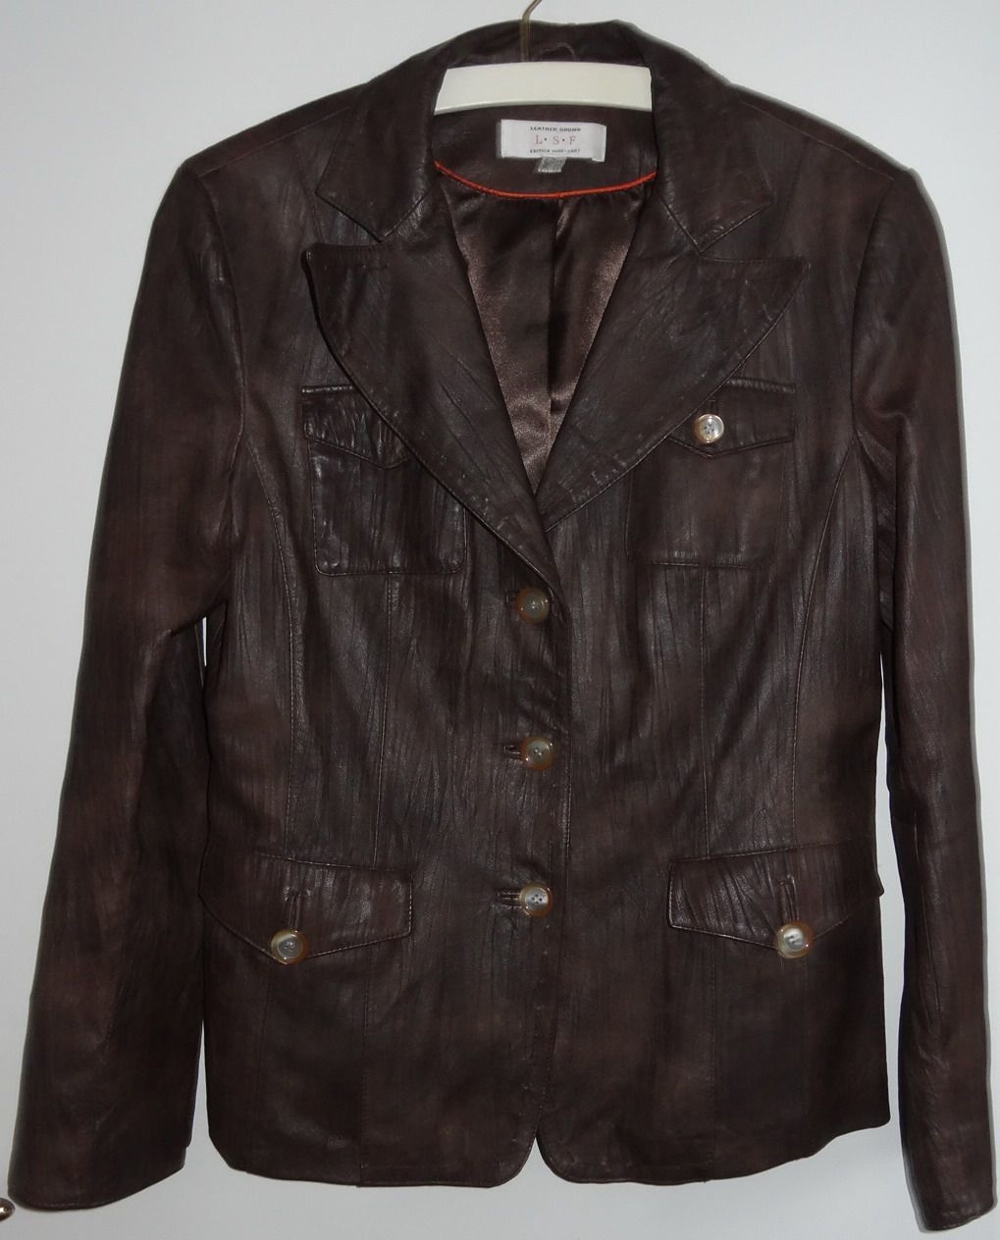 KT Leather Sound LSF Lederjacke Gr. 44 braun Nappaleder wenig getragen einwandfrei Damenjacke Jacke